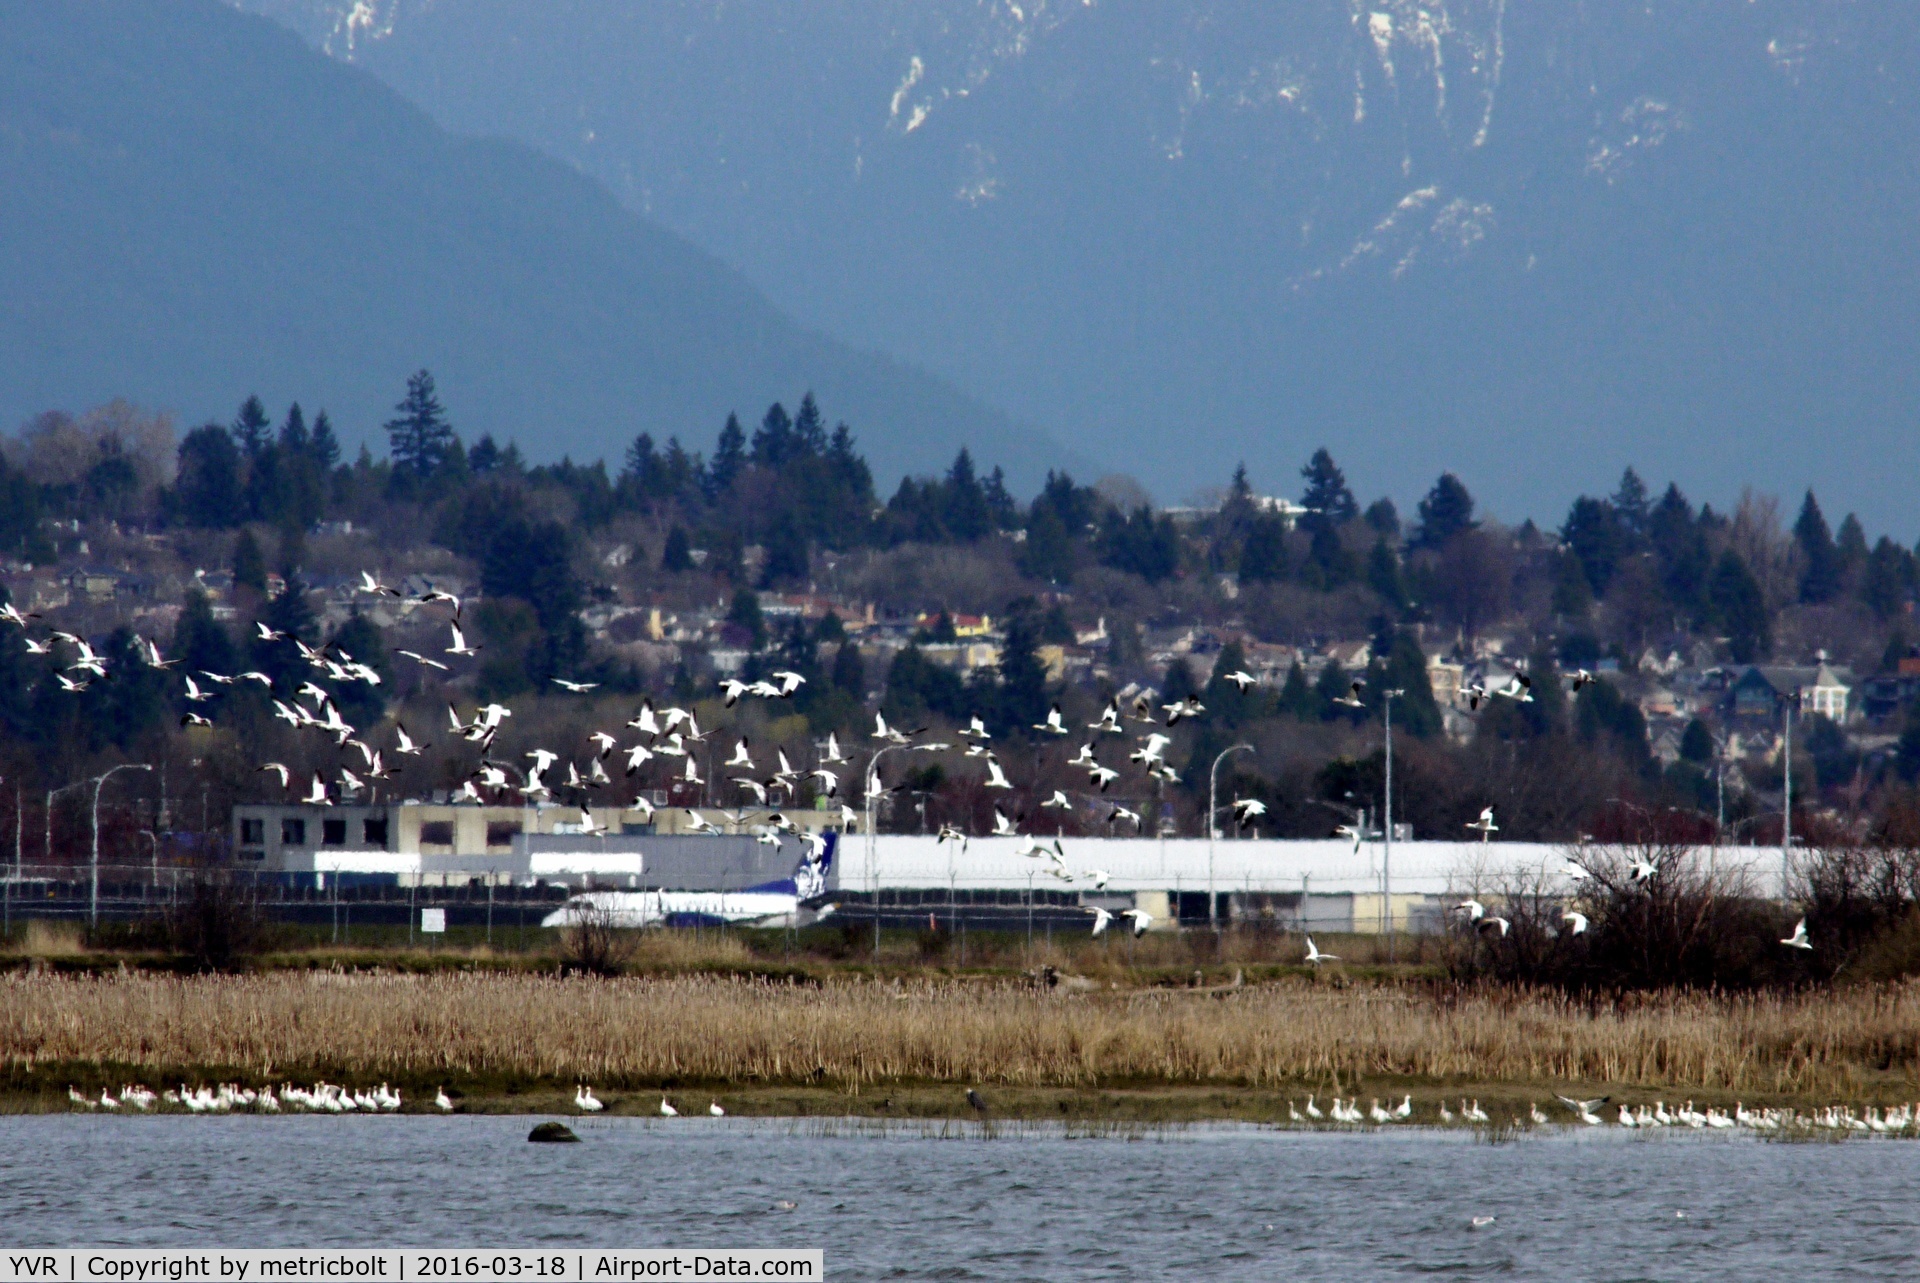 Vancouver International Airport, Vancouver, British Columbia Canada (YVR) - Danger of bird strike?